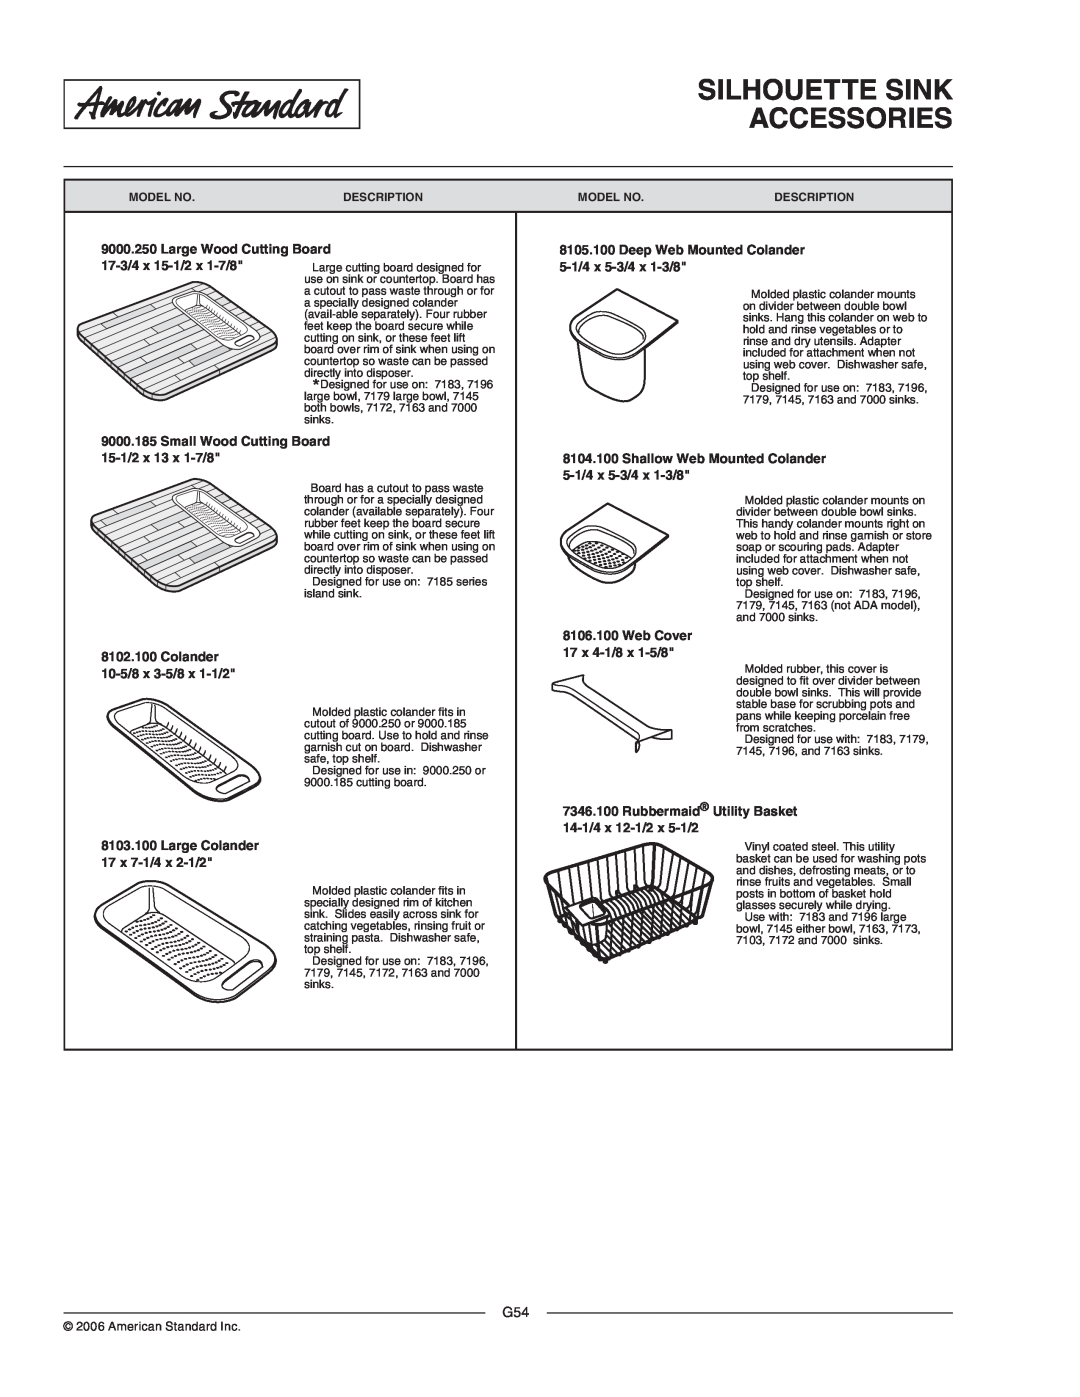 American Standard 8102.100, 8105.100, 8106.100, 8104.100, 7346.100, 9000.185, 9000.250 manual Silhouette Sink Accessories 